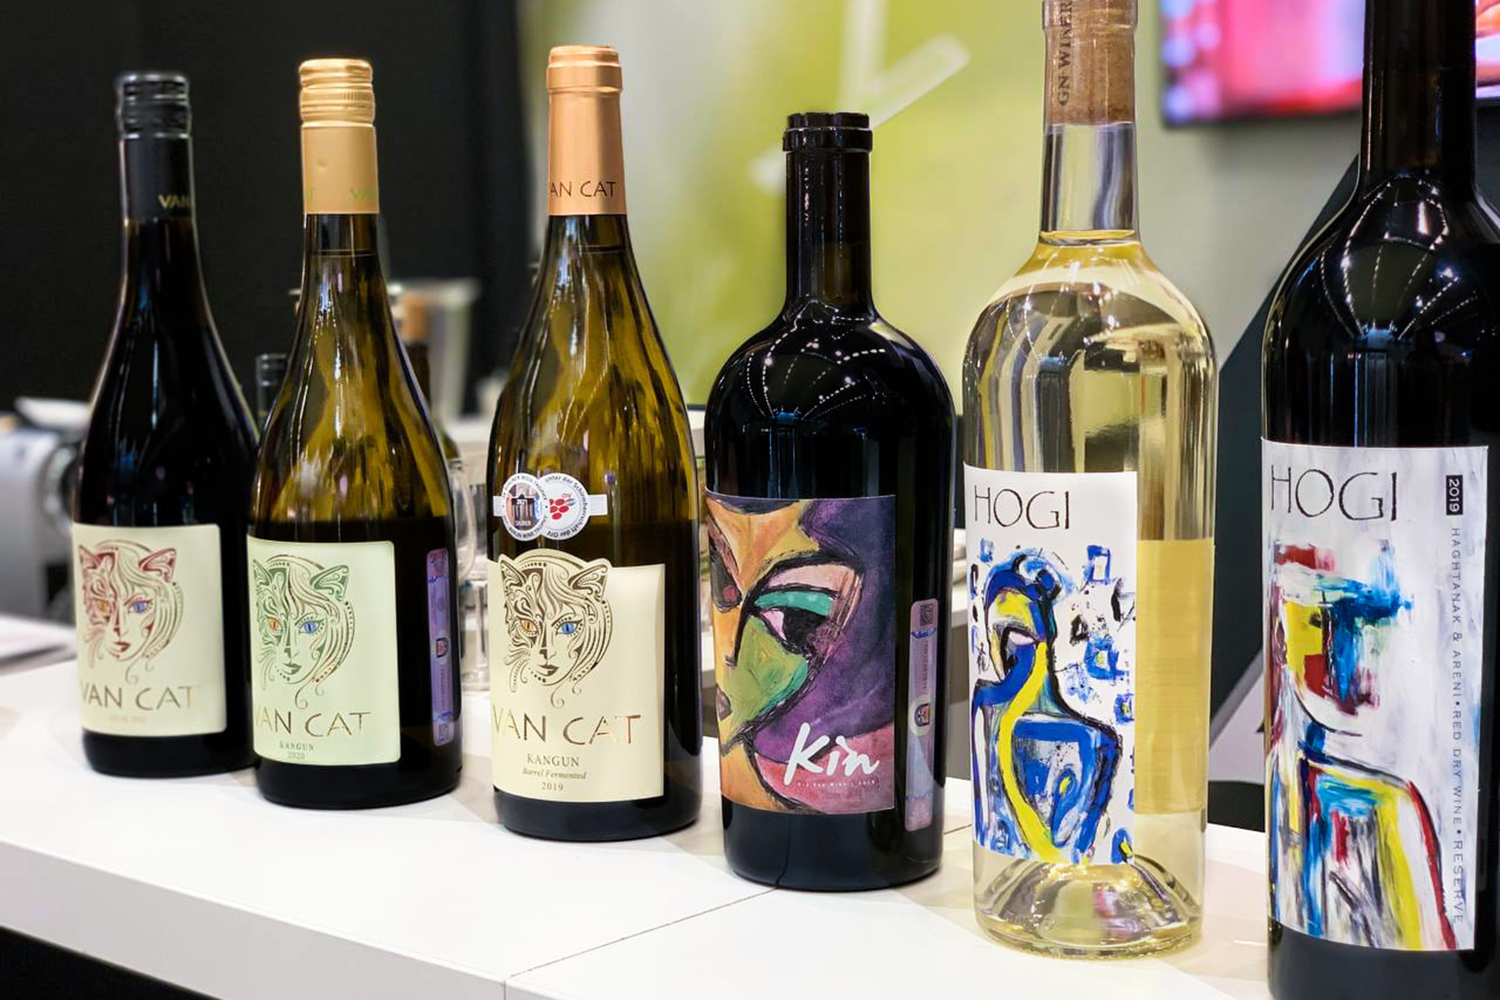 Kin Reserve գինին Կանադայում ոսկե մեդալի է արժանացել